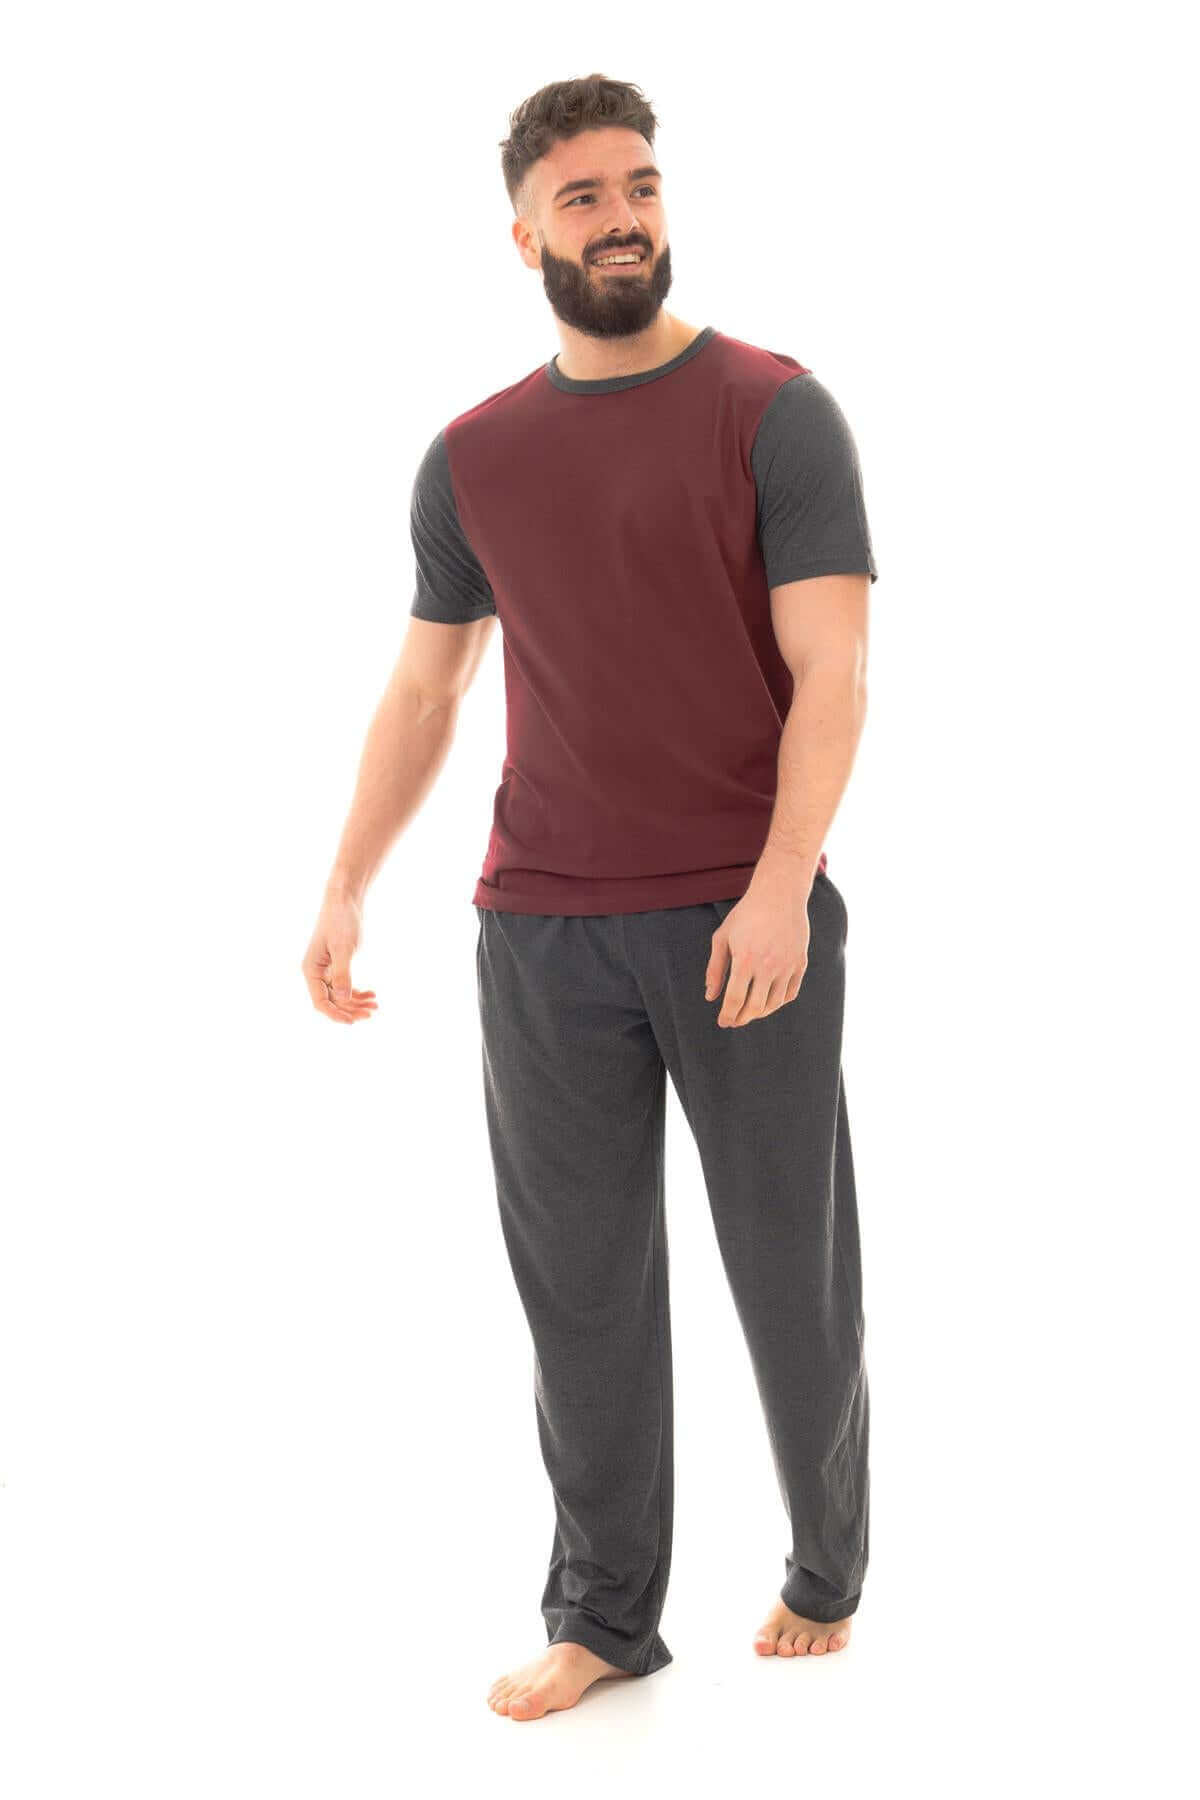 Men's Long Pyjama Sets Cotton T Shirt Pants Loungewear. Buy now for £10.00. A Pyjamas by Sock Stack. black, bottom, boys, charcoal, claret, comfortable, cotton, grey, home, large, loungewear, marl grey, maroon, medium, mens, navy, nightwear, pants, pj, po